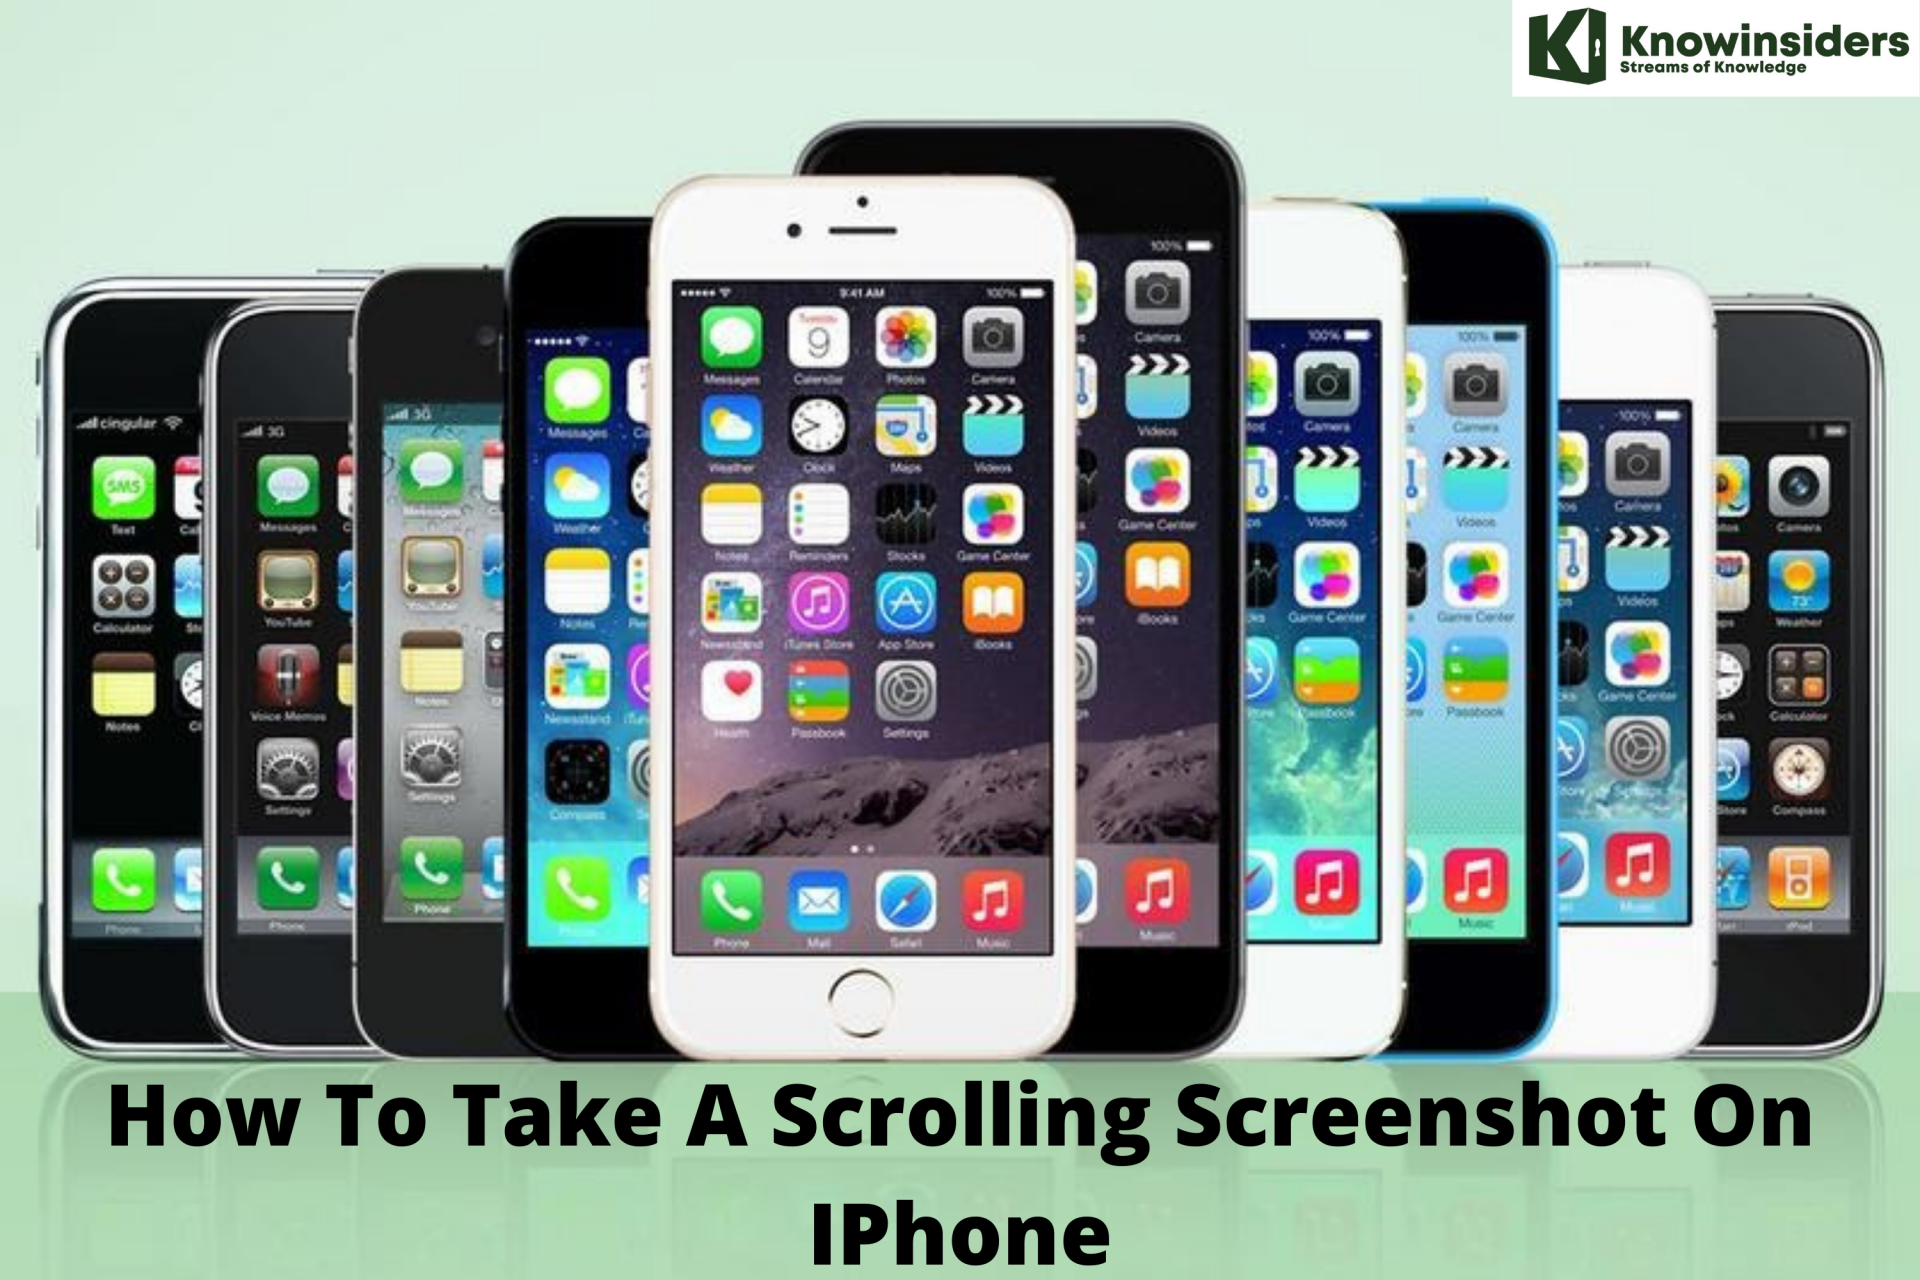 How To Take A Scrolling Screenshot on iPhone